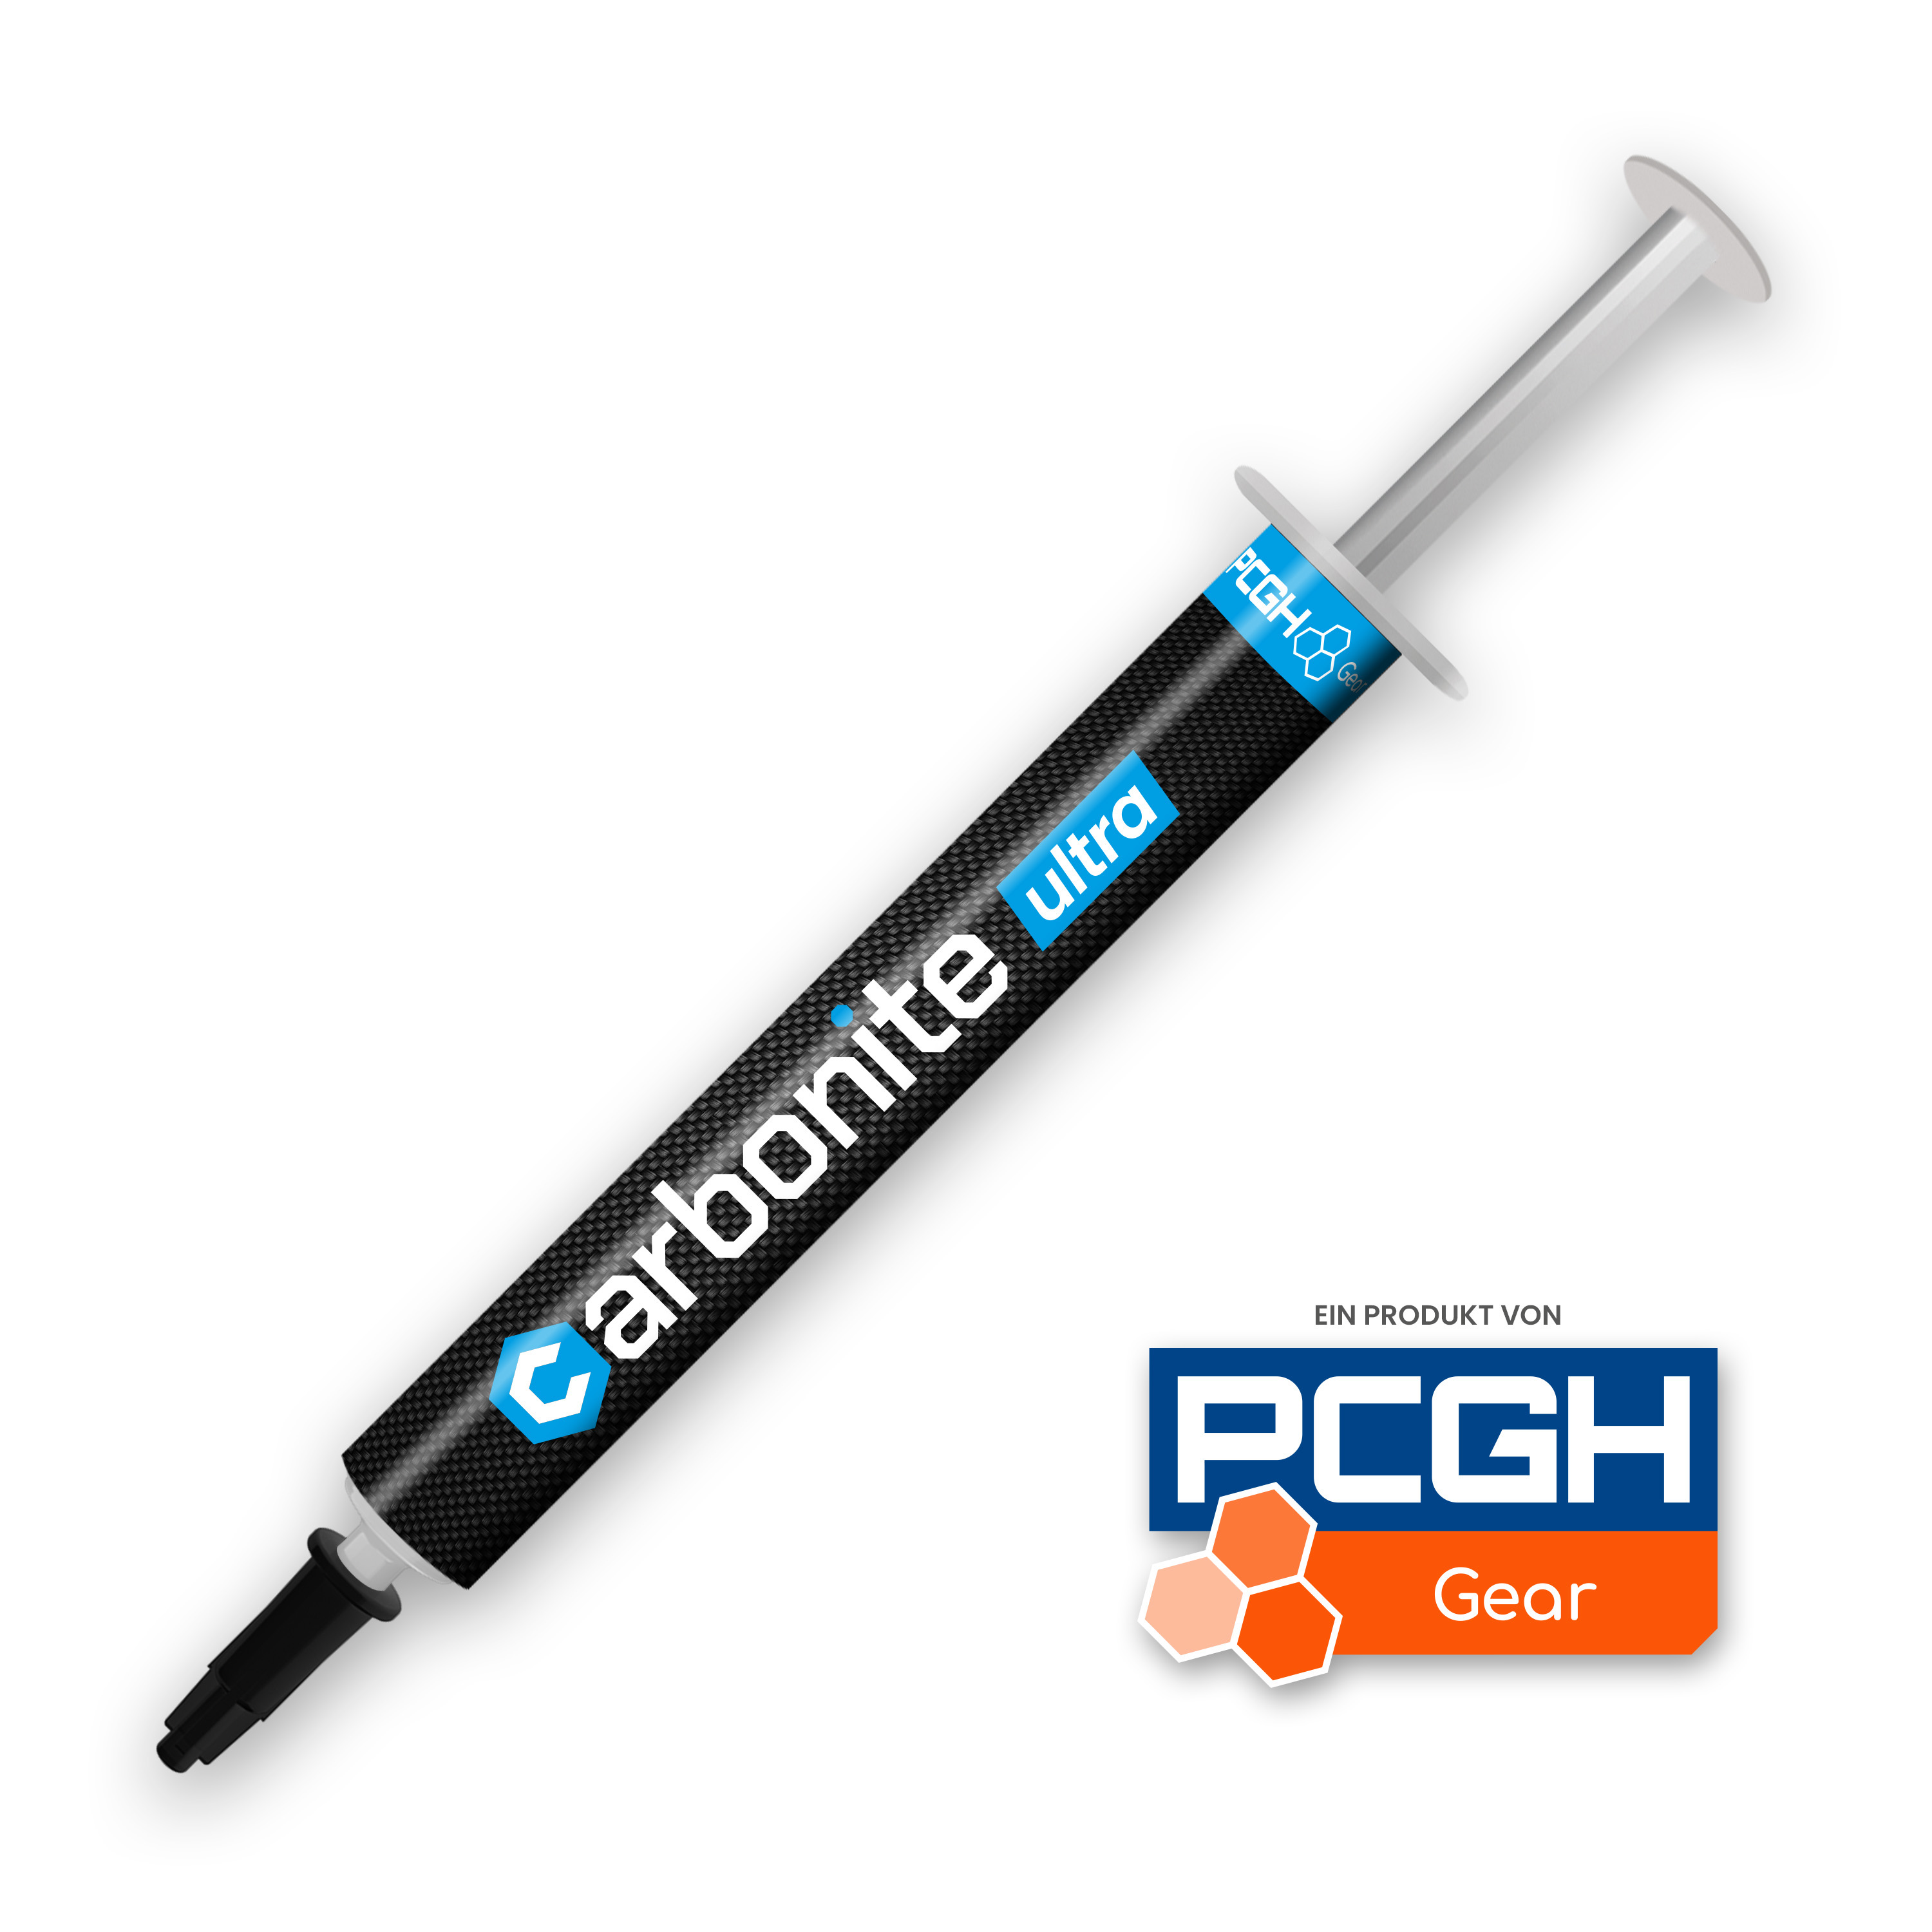 PCGH-Gear Carbonite Ultra (1g)